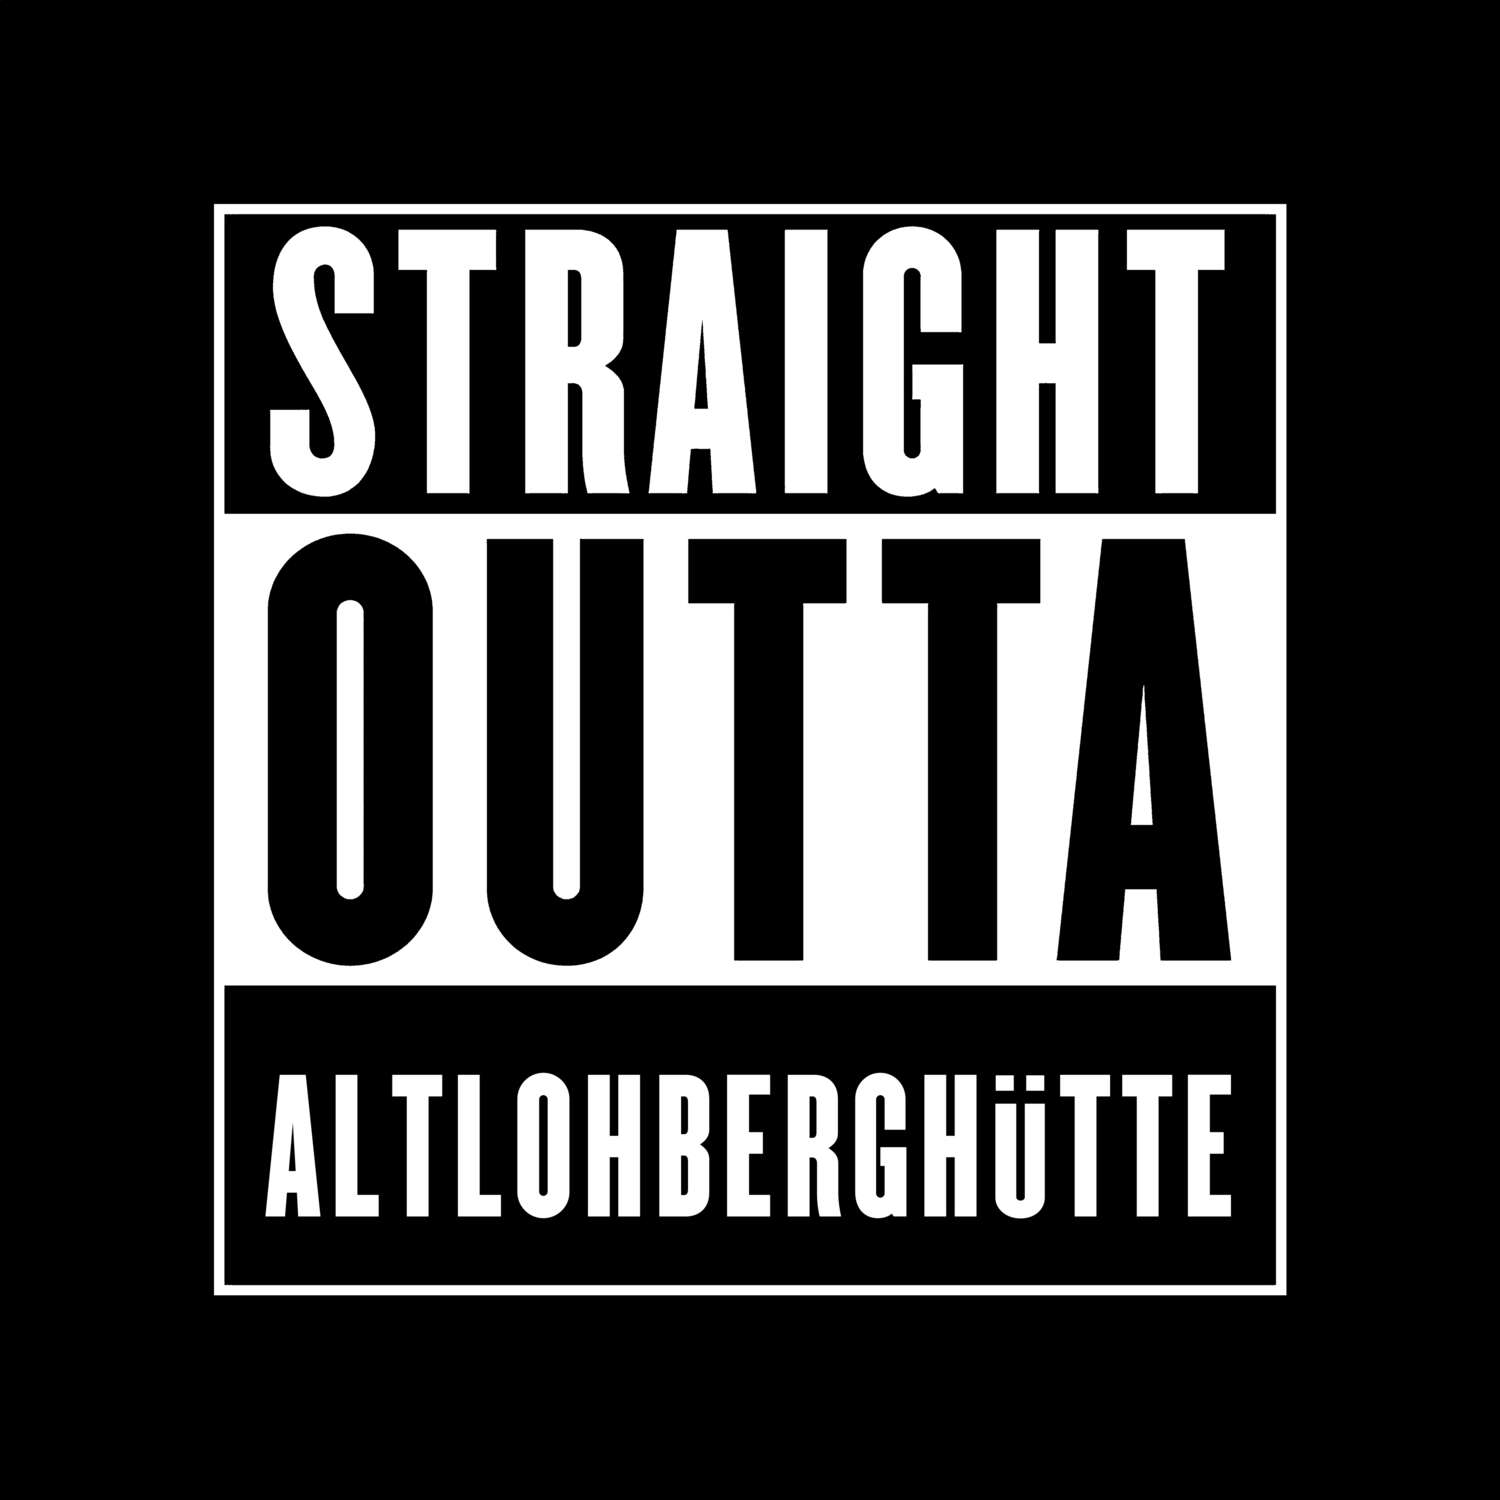 Altlohberghütte T-Shirt »Straight Outta«